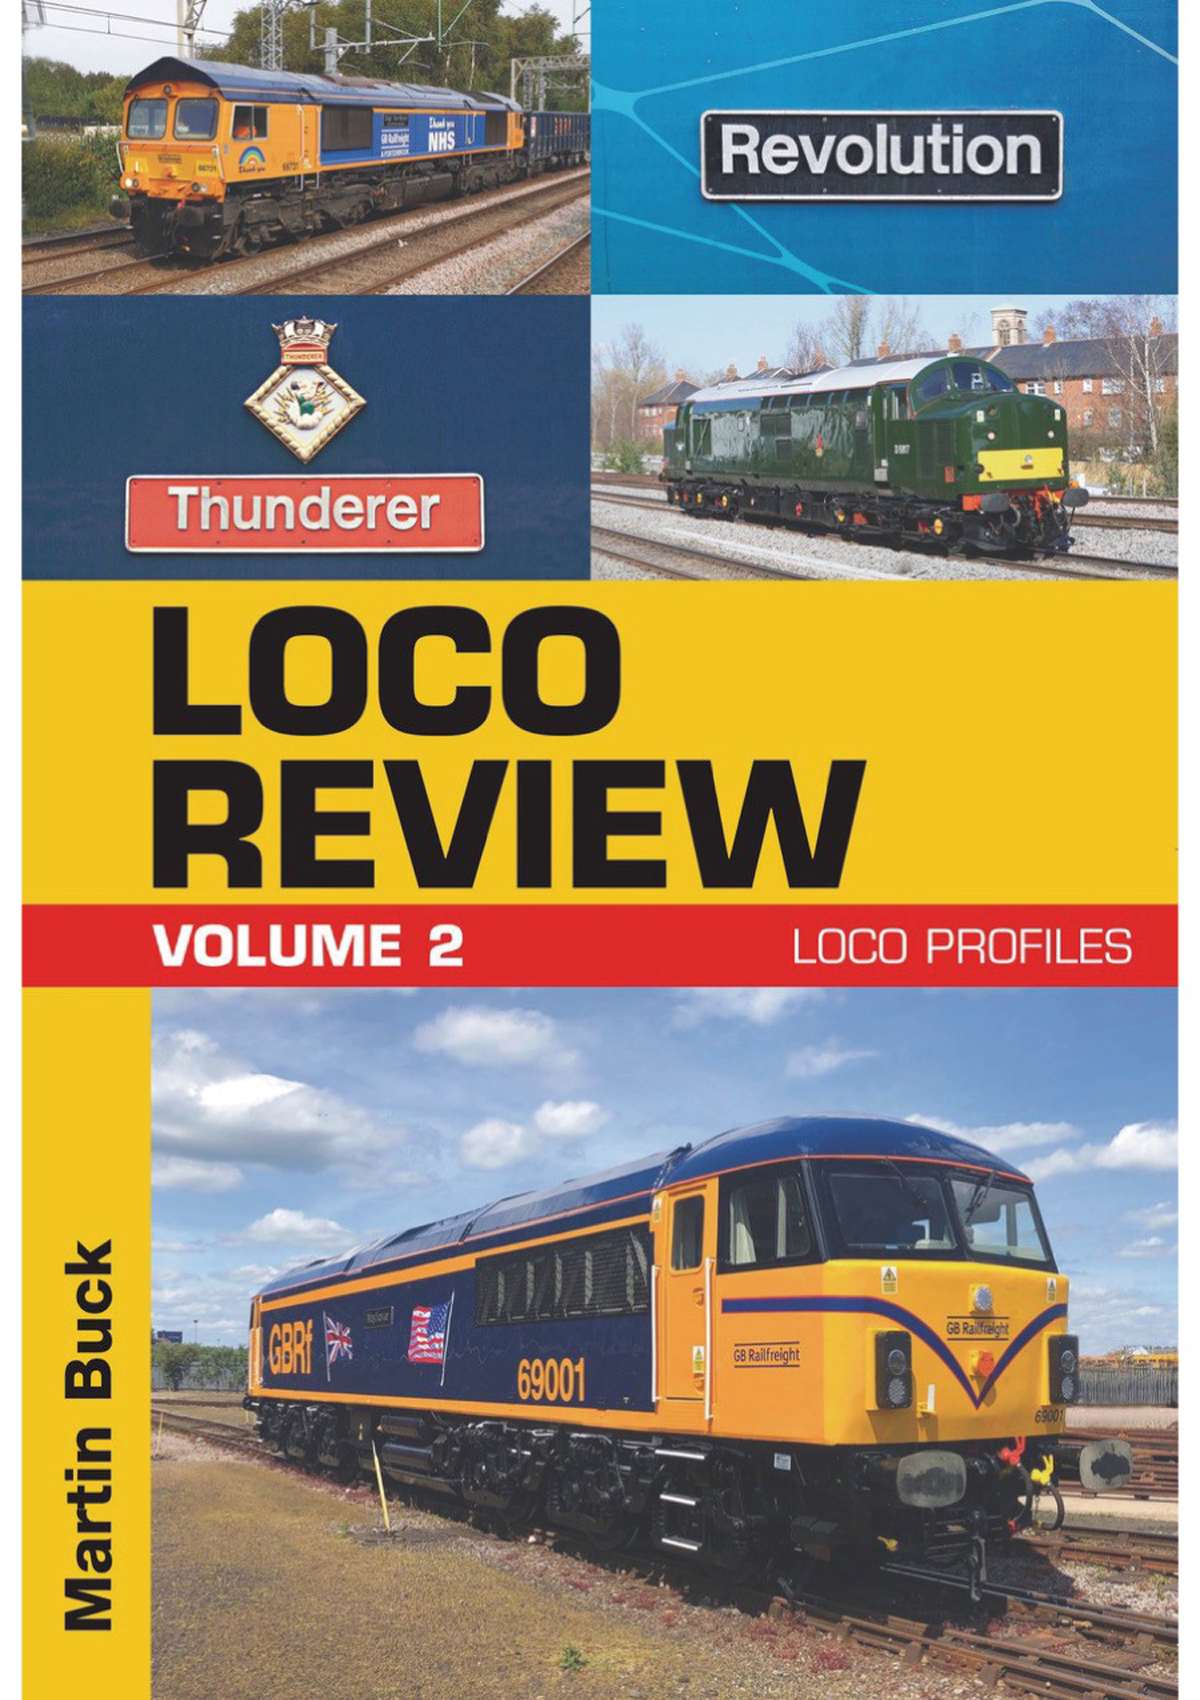 2977 - LOCO REVIEW Volume 2 - Loco Profiles